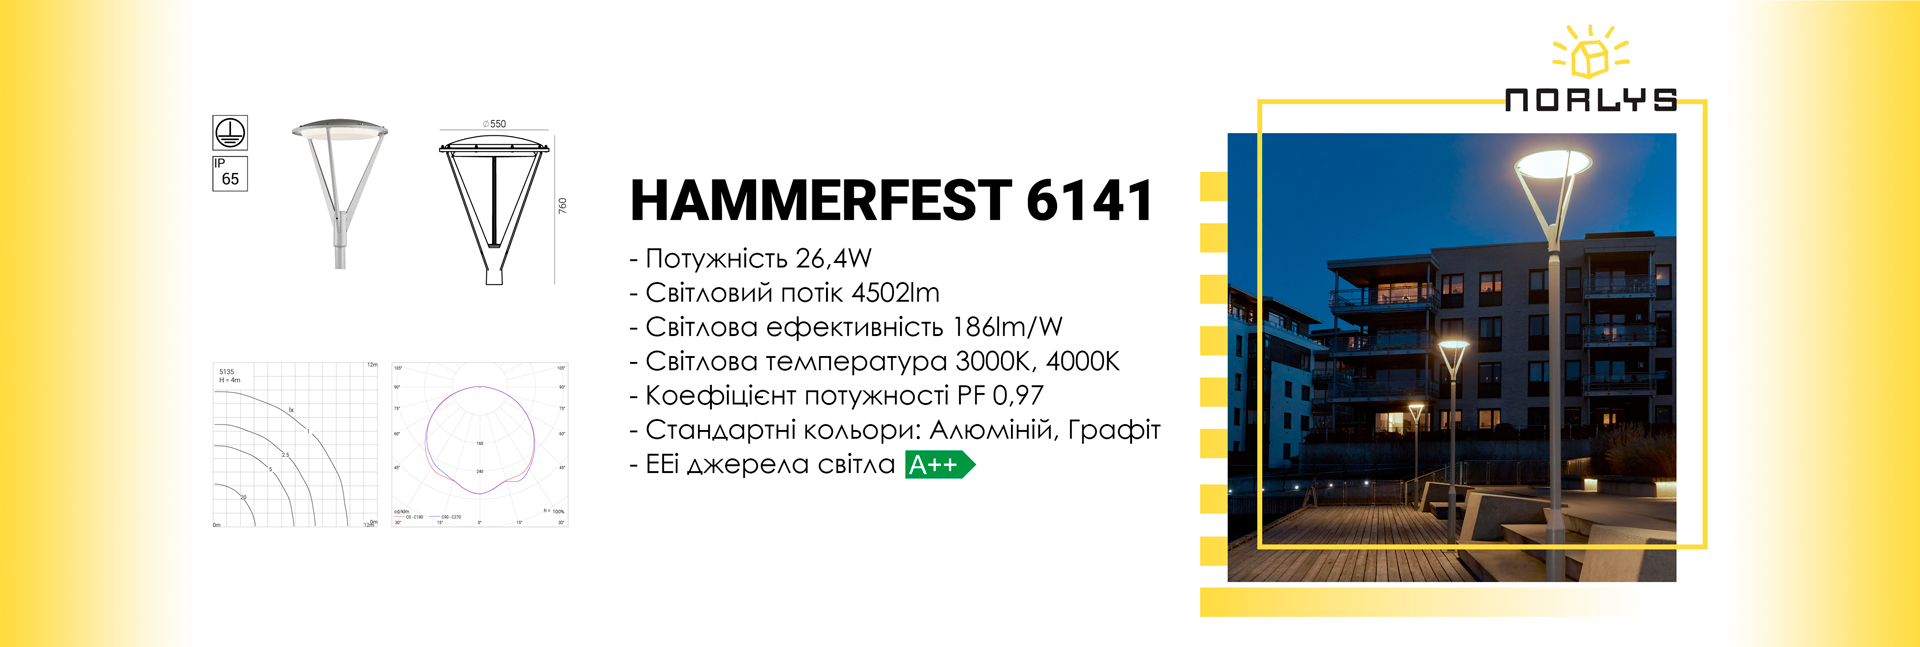 Hammerfest 6141